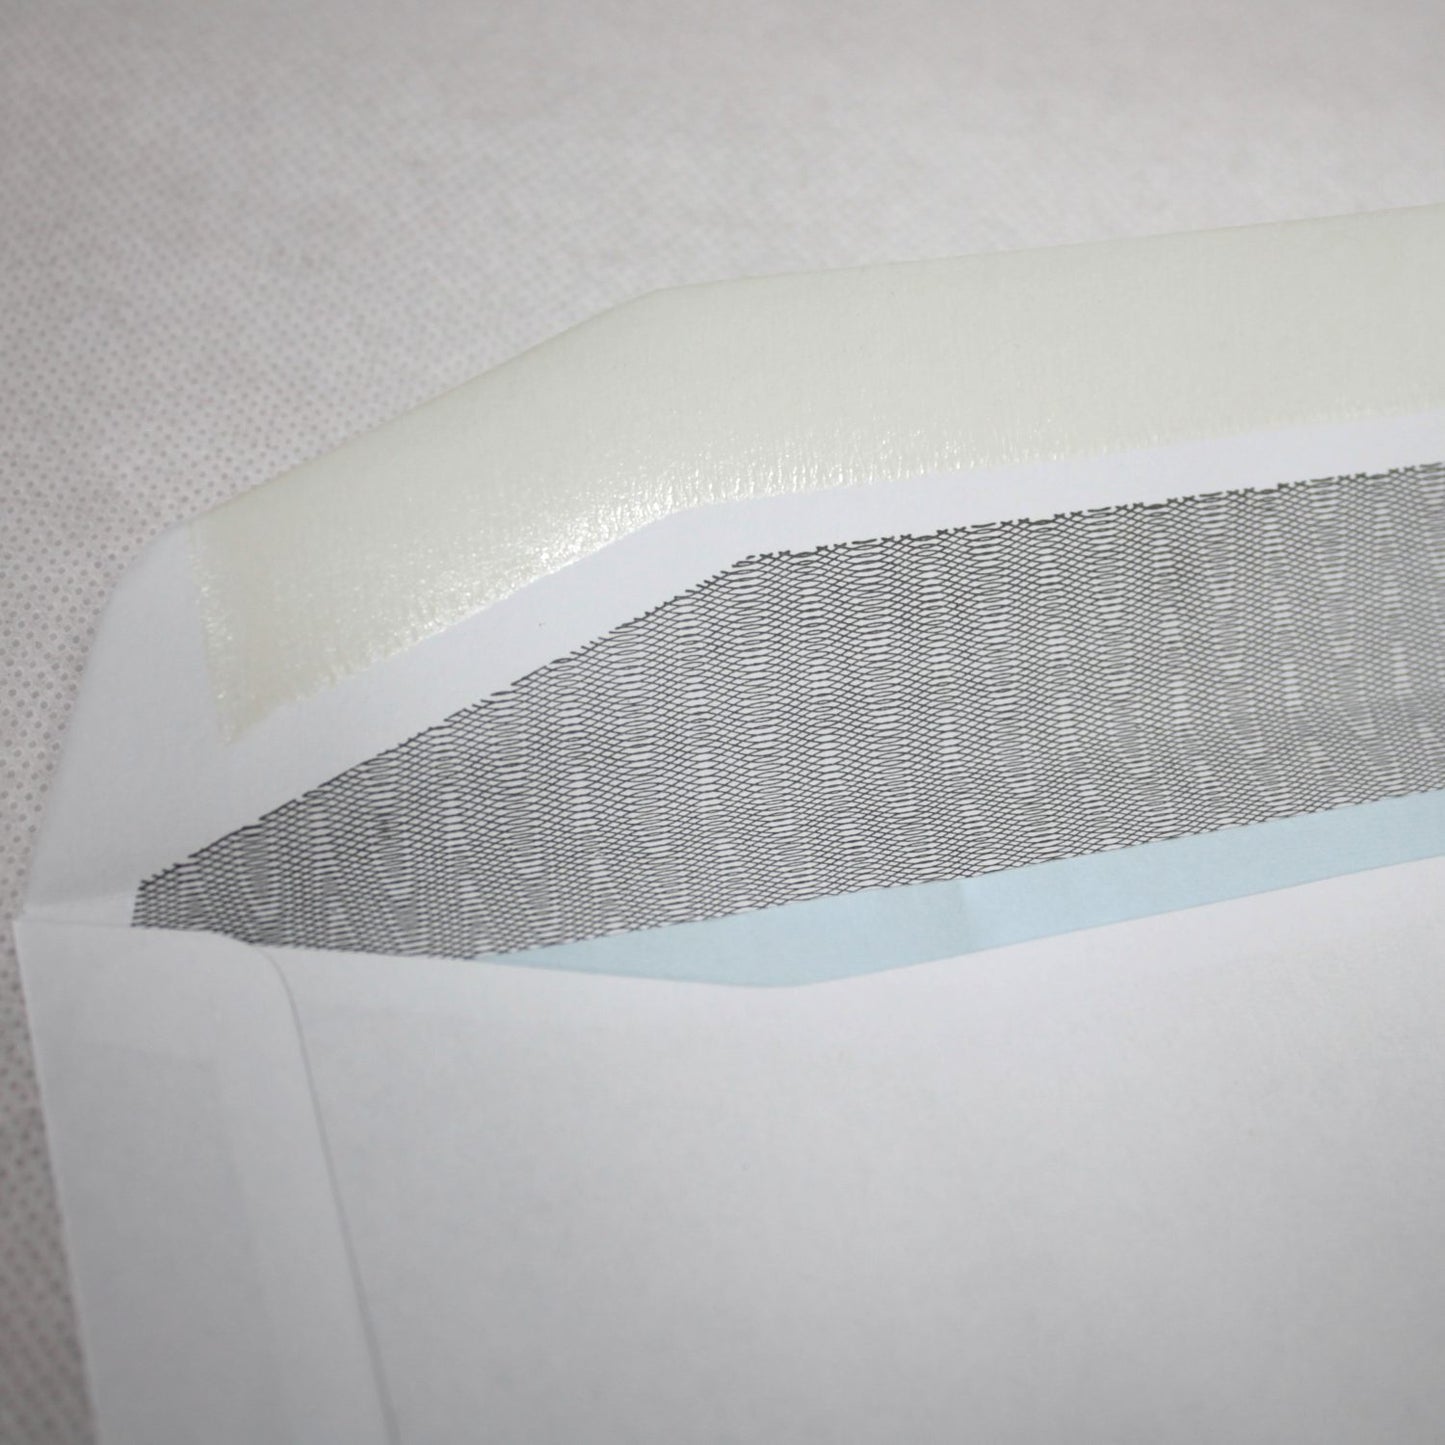 121x235mm DL+ White Gummed Envelopes (Window 35x90mm / 20mm left, 25mm up)